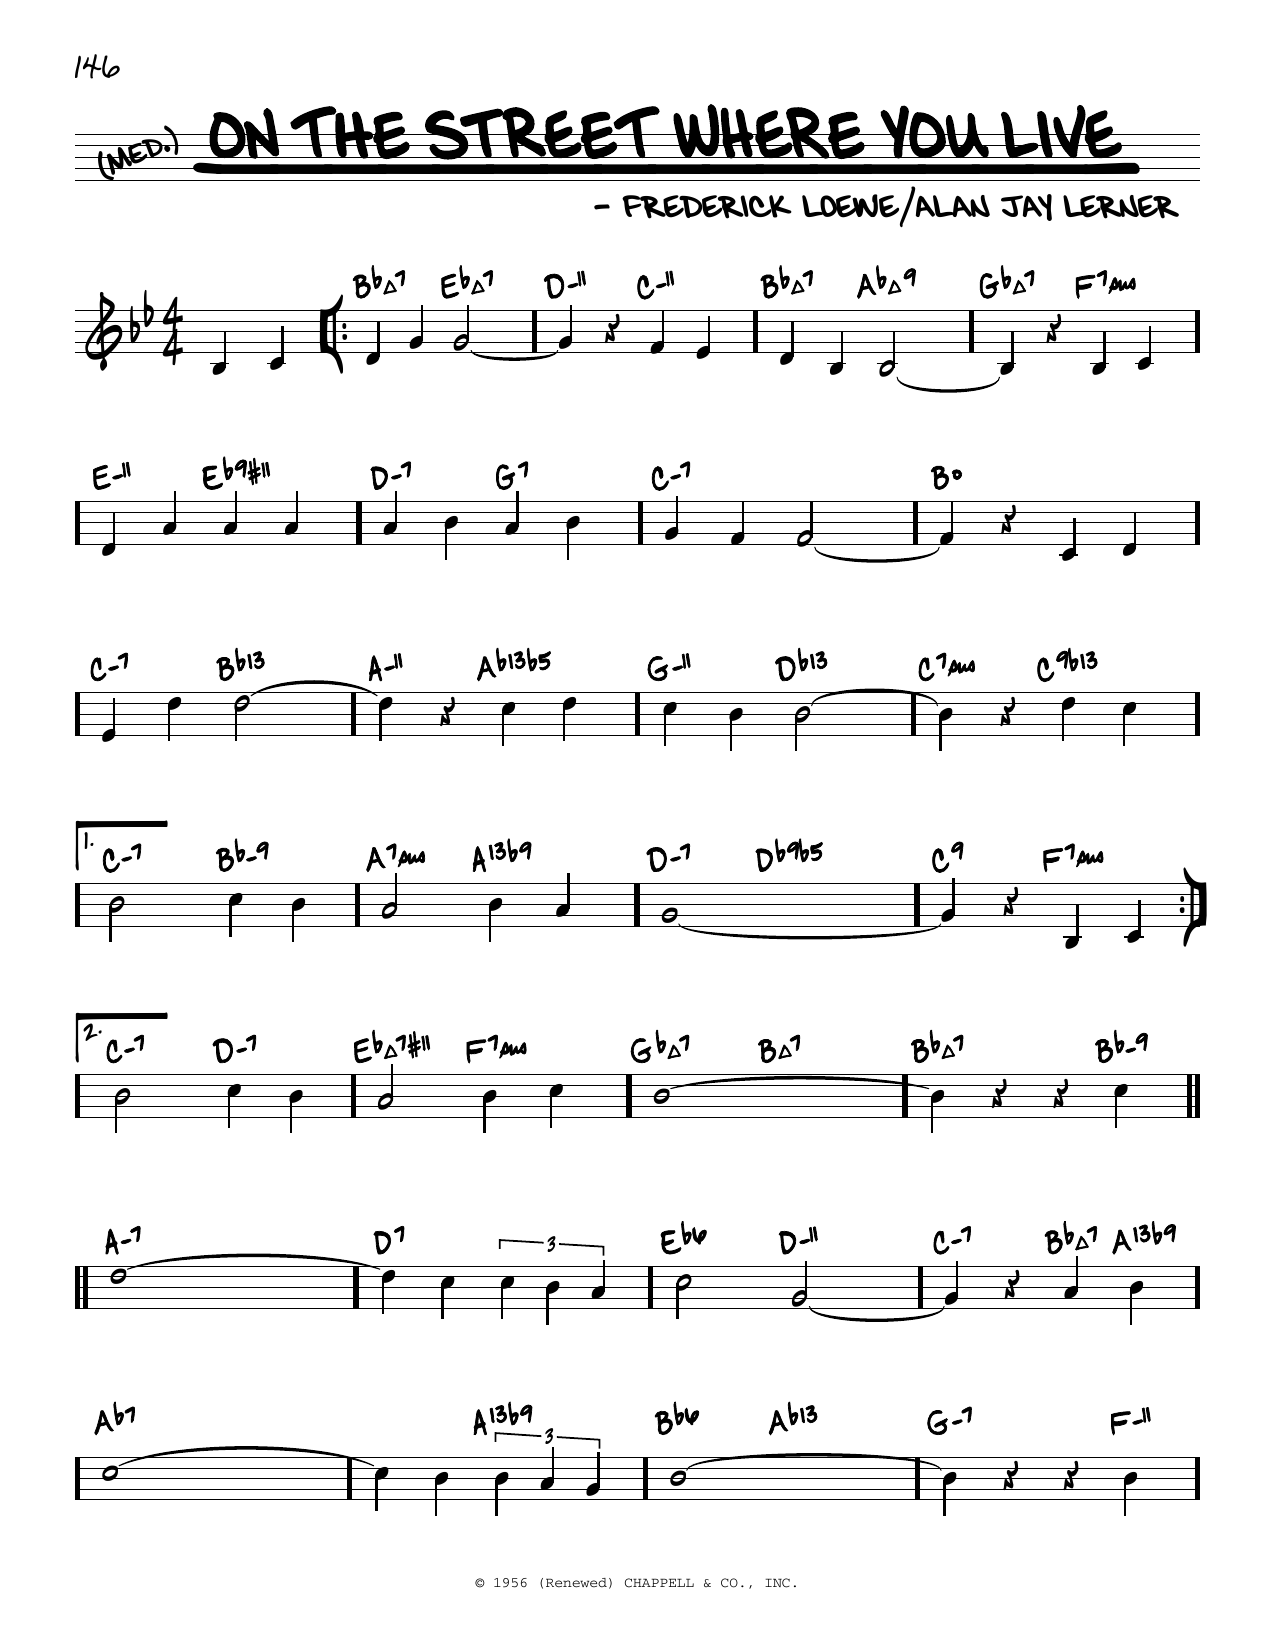 Lerner & Loewe On The Street Where You Live (arr. David Hazeltine) Sheet Music Notes & Chords for Real Book – Enhanced Chords - Download or Print PDF